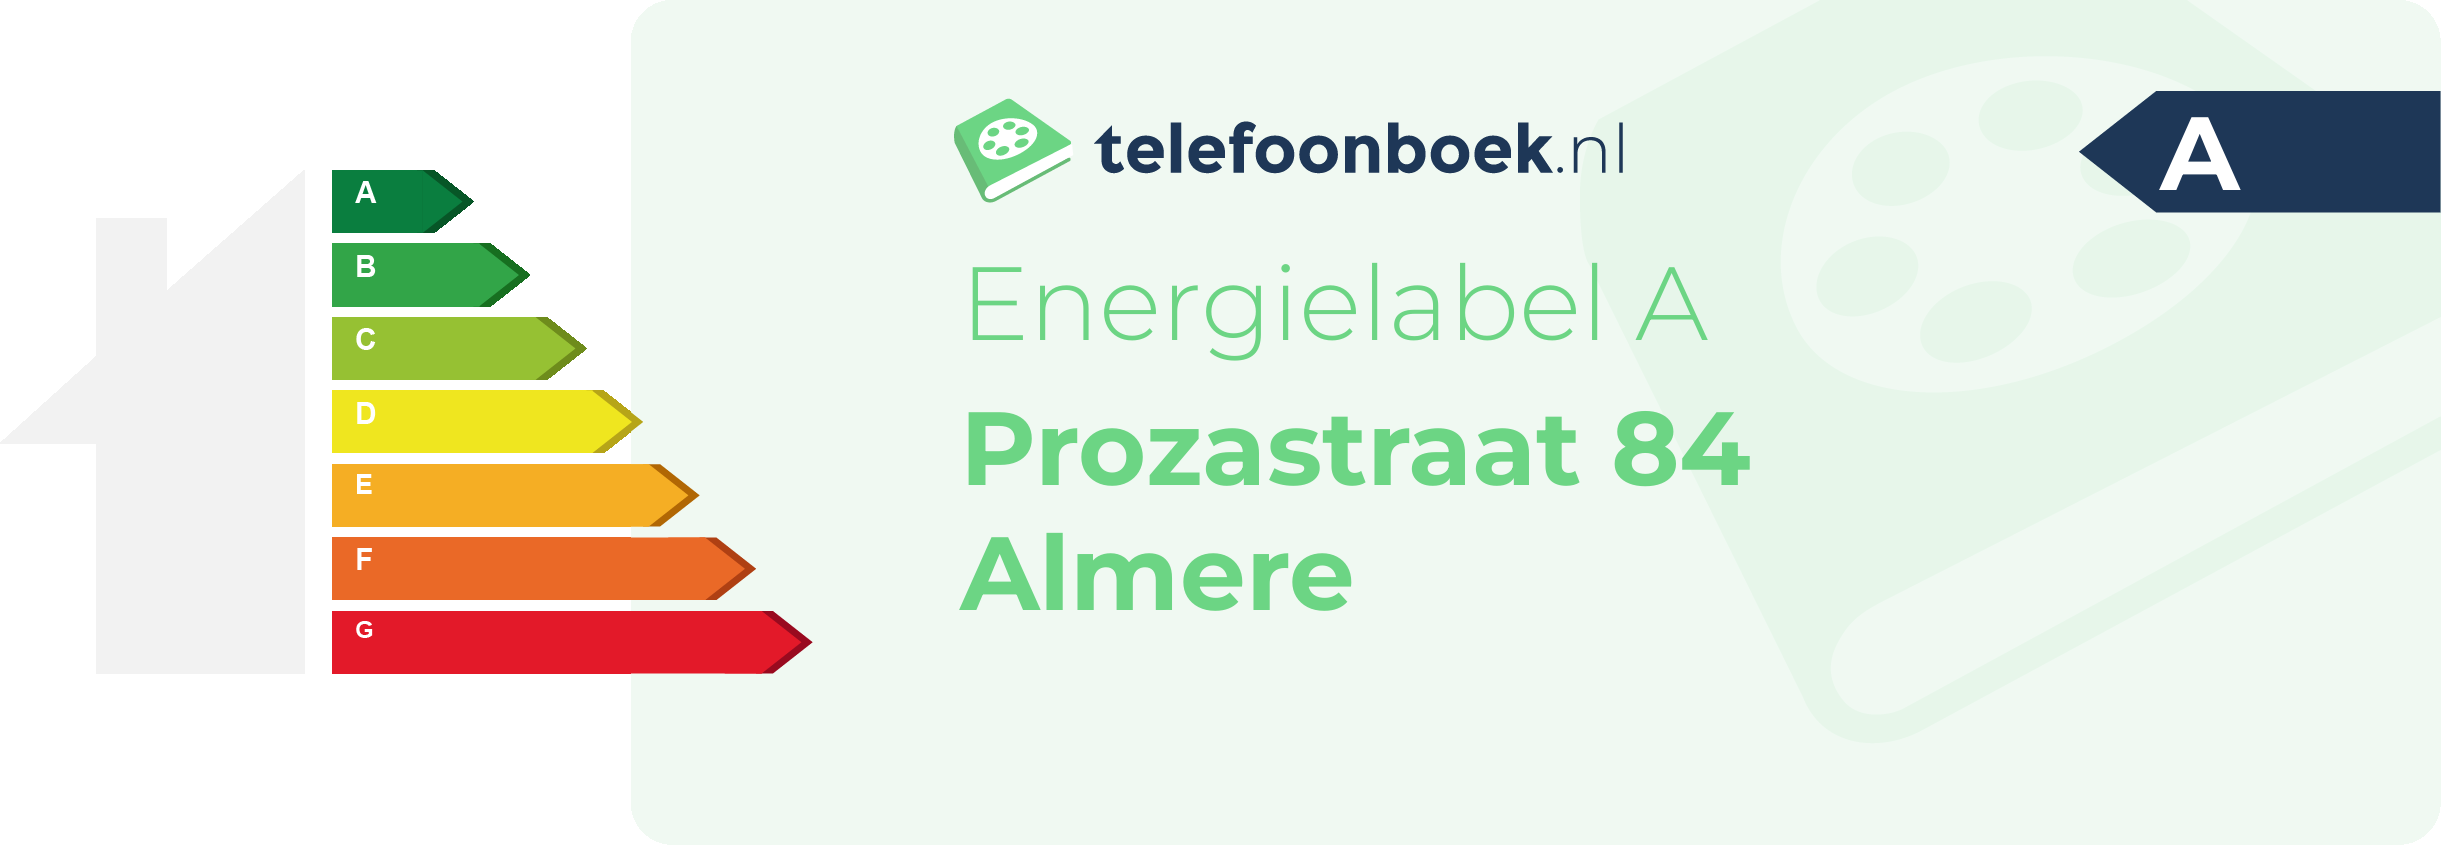 Energielabel Prozastraat 84 Almere